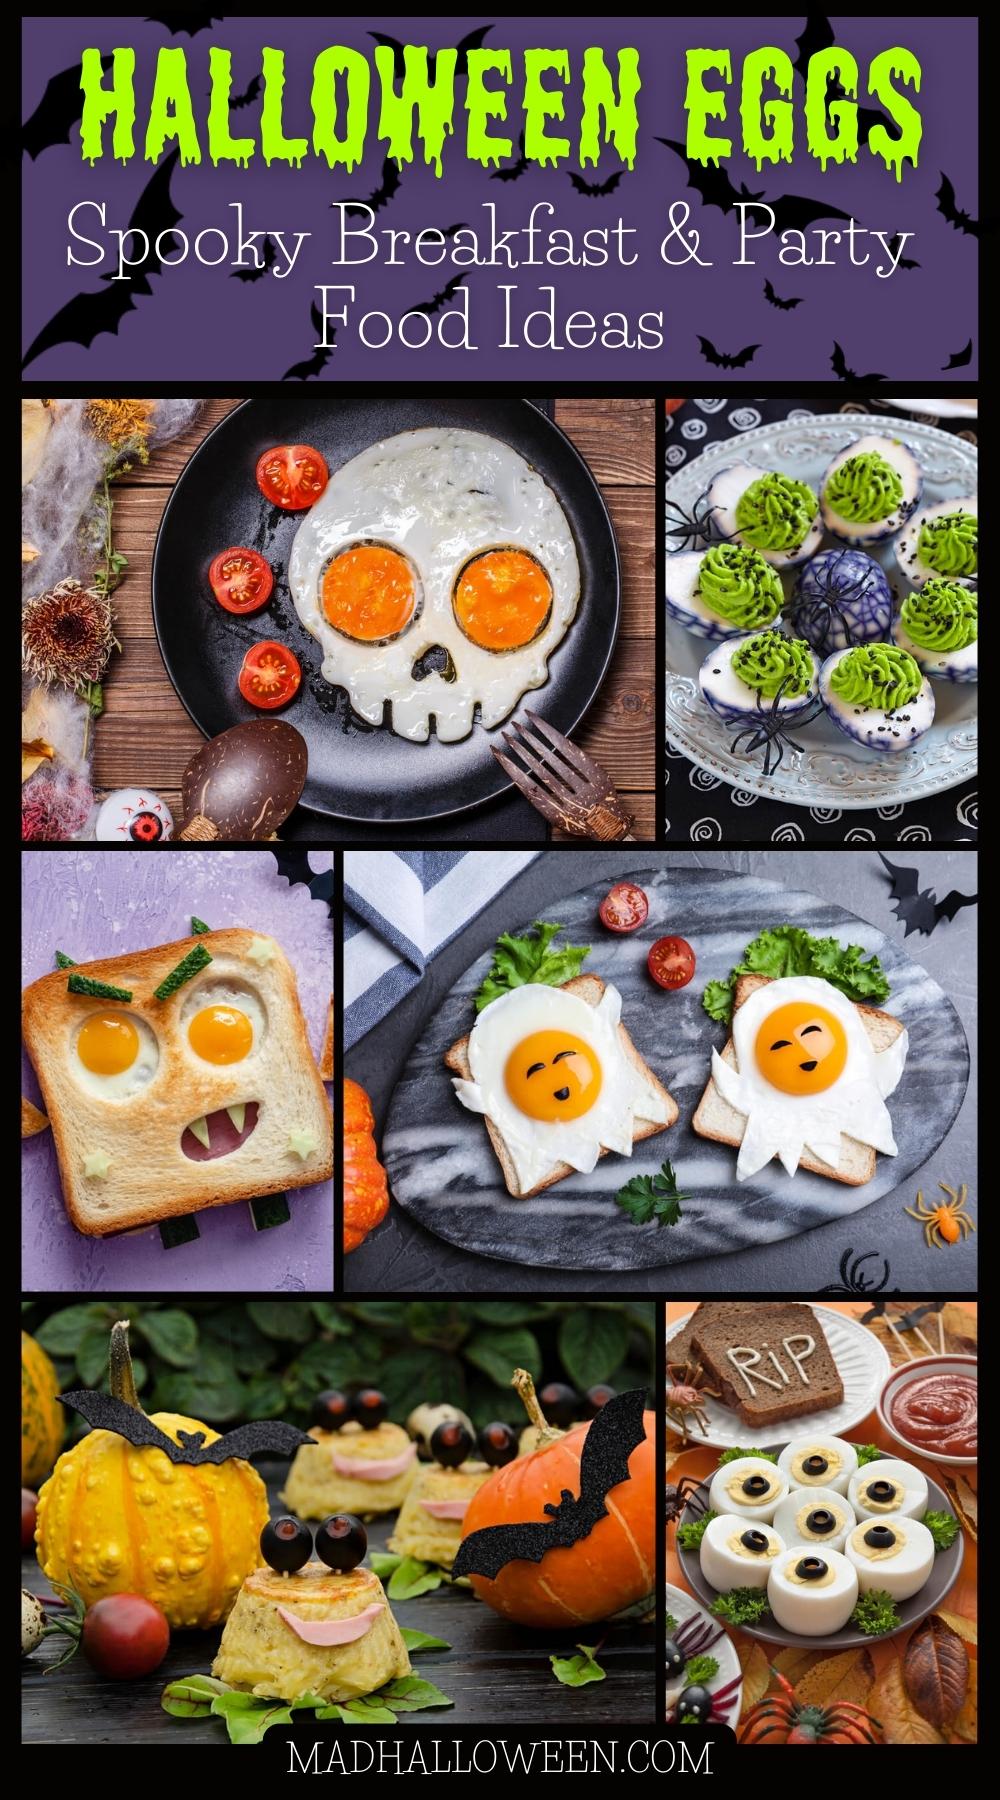 Halloween Eggs Spooky Breakfast & Party Food Ideas - Deviled Eggs - Ghost Eggs 